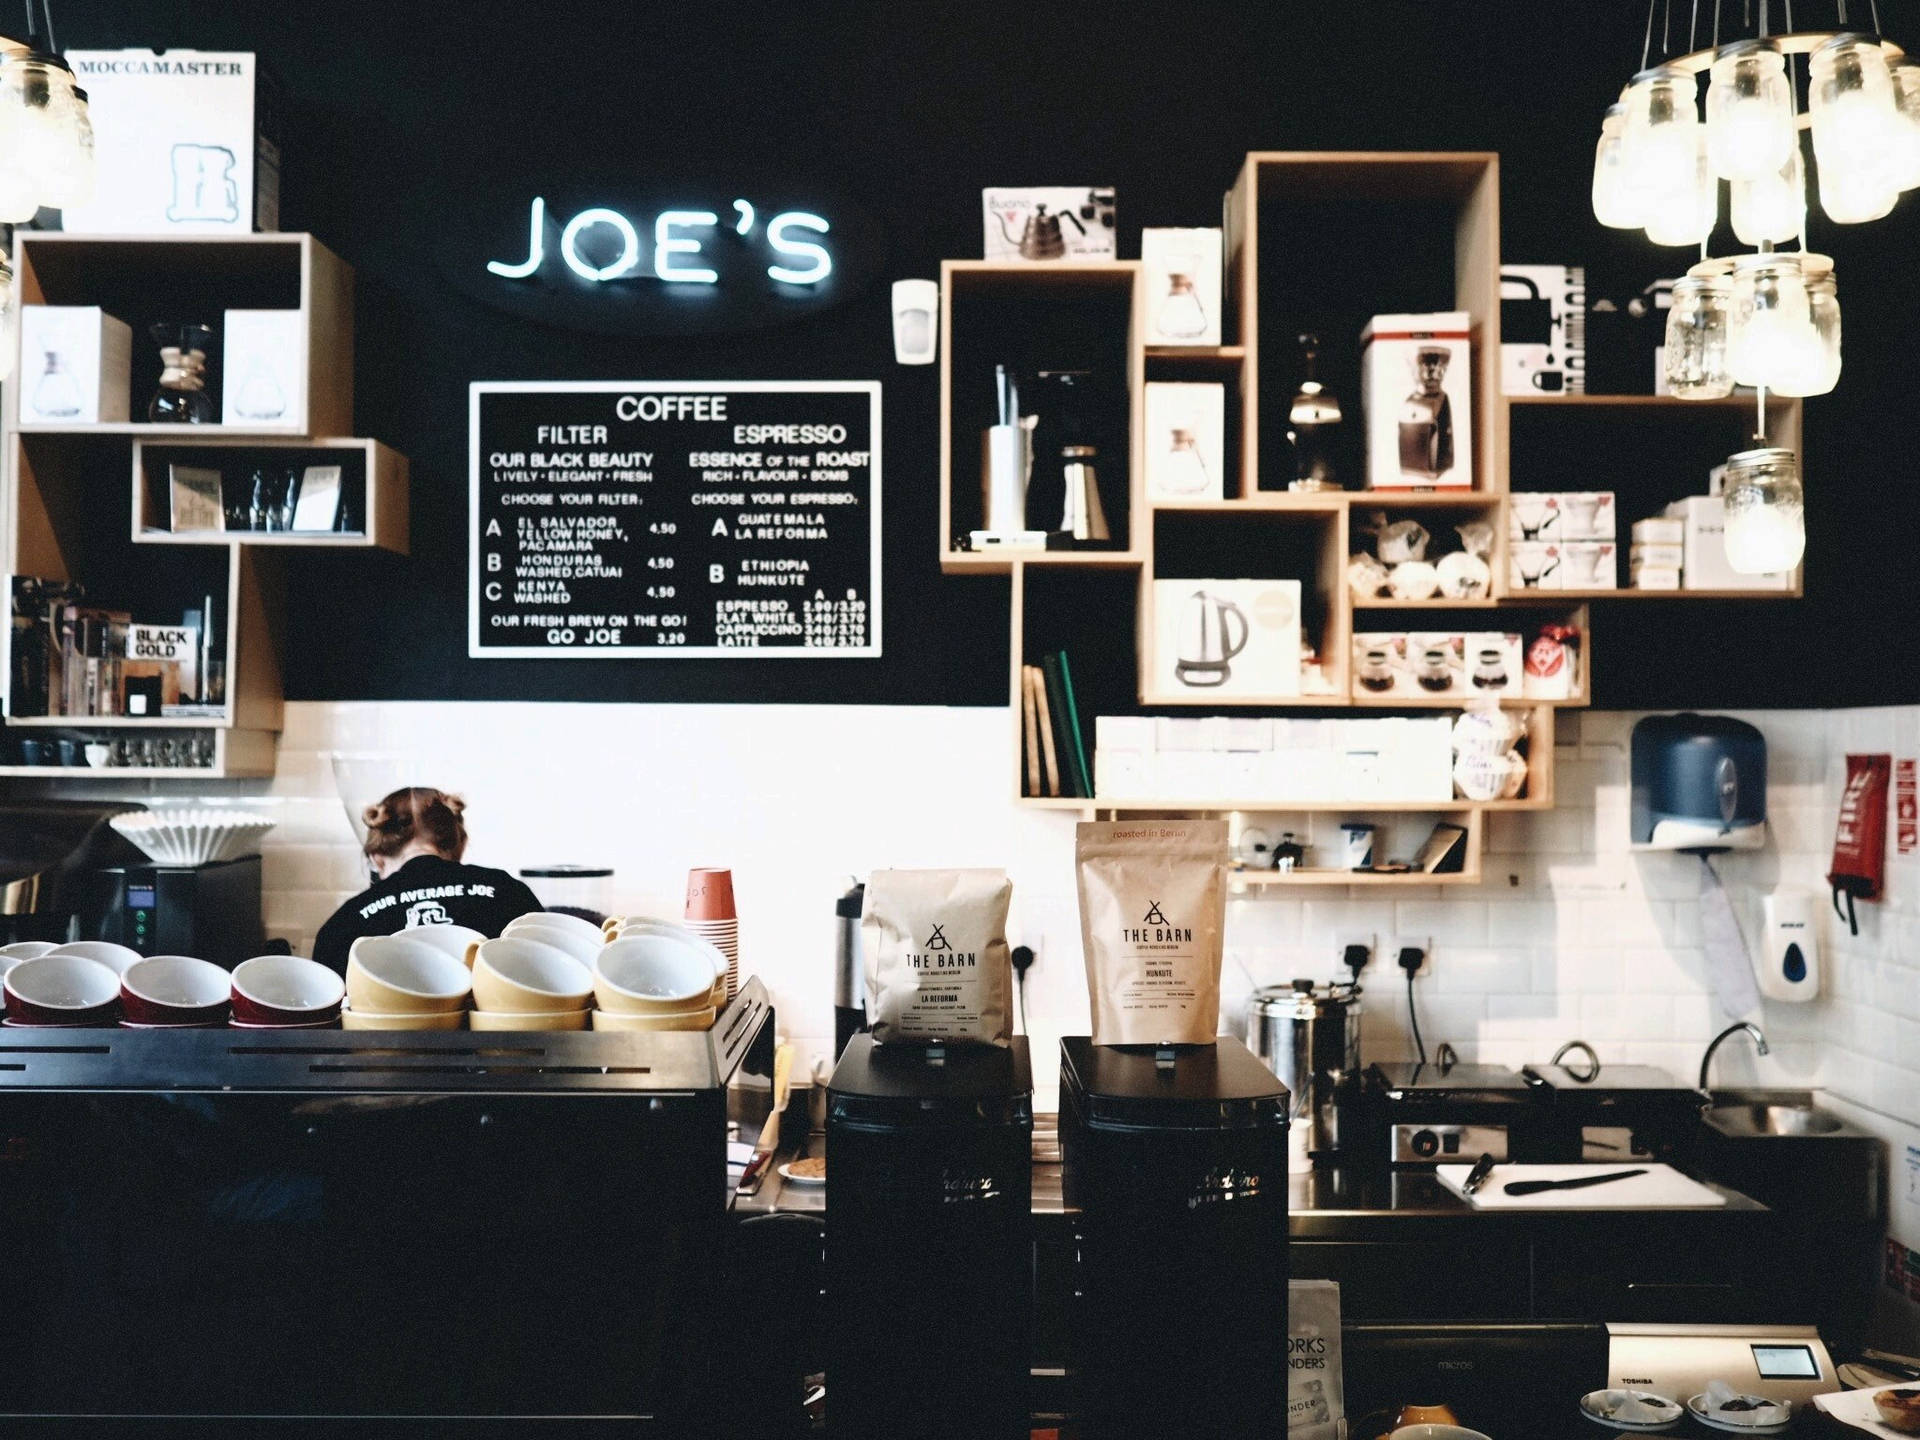 Joe’scoffee Shop – Spanish Translation: 